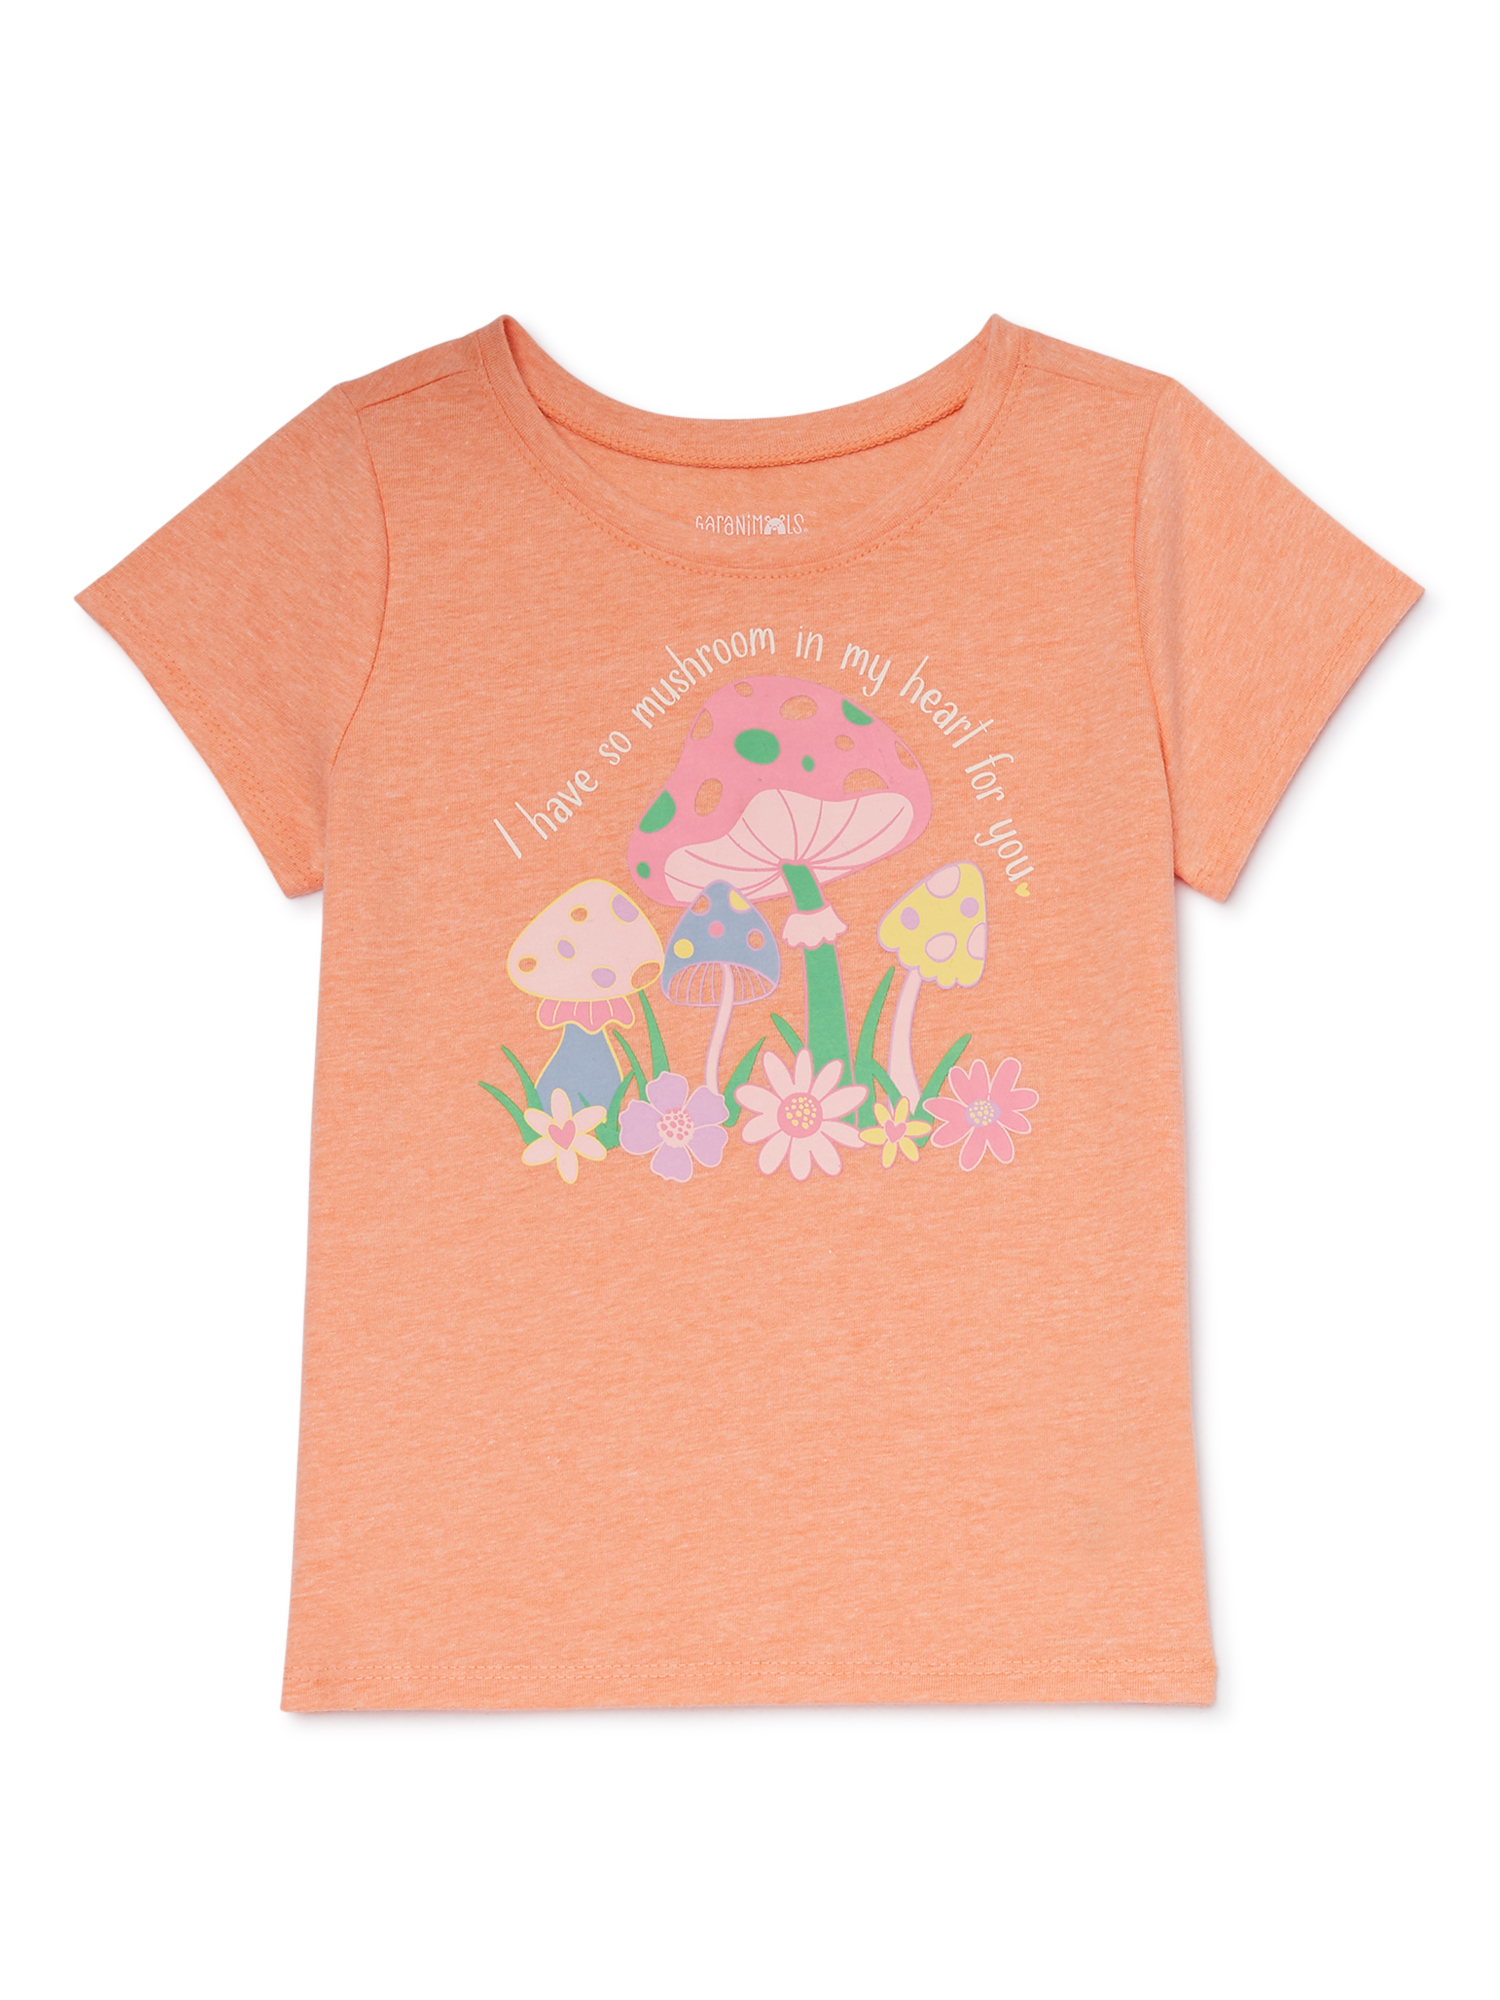 Garanimals Toddler Girl Short Sleeve Graphic T-Shirt, Sizes 18M-5T - image 1 of 4